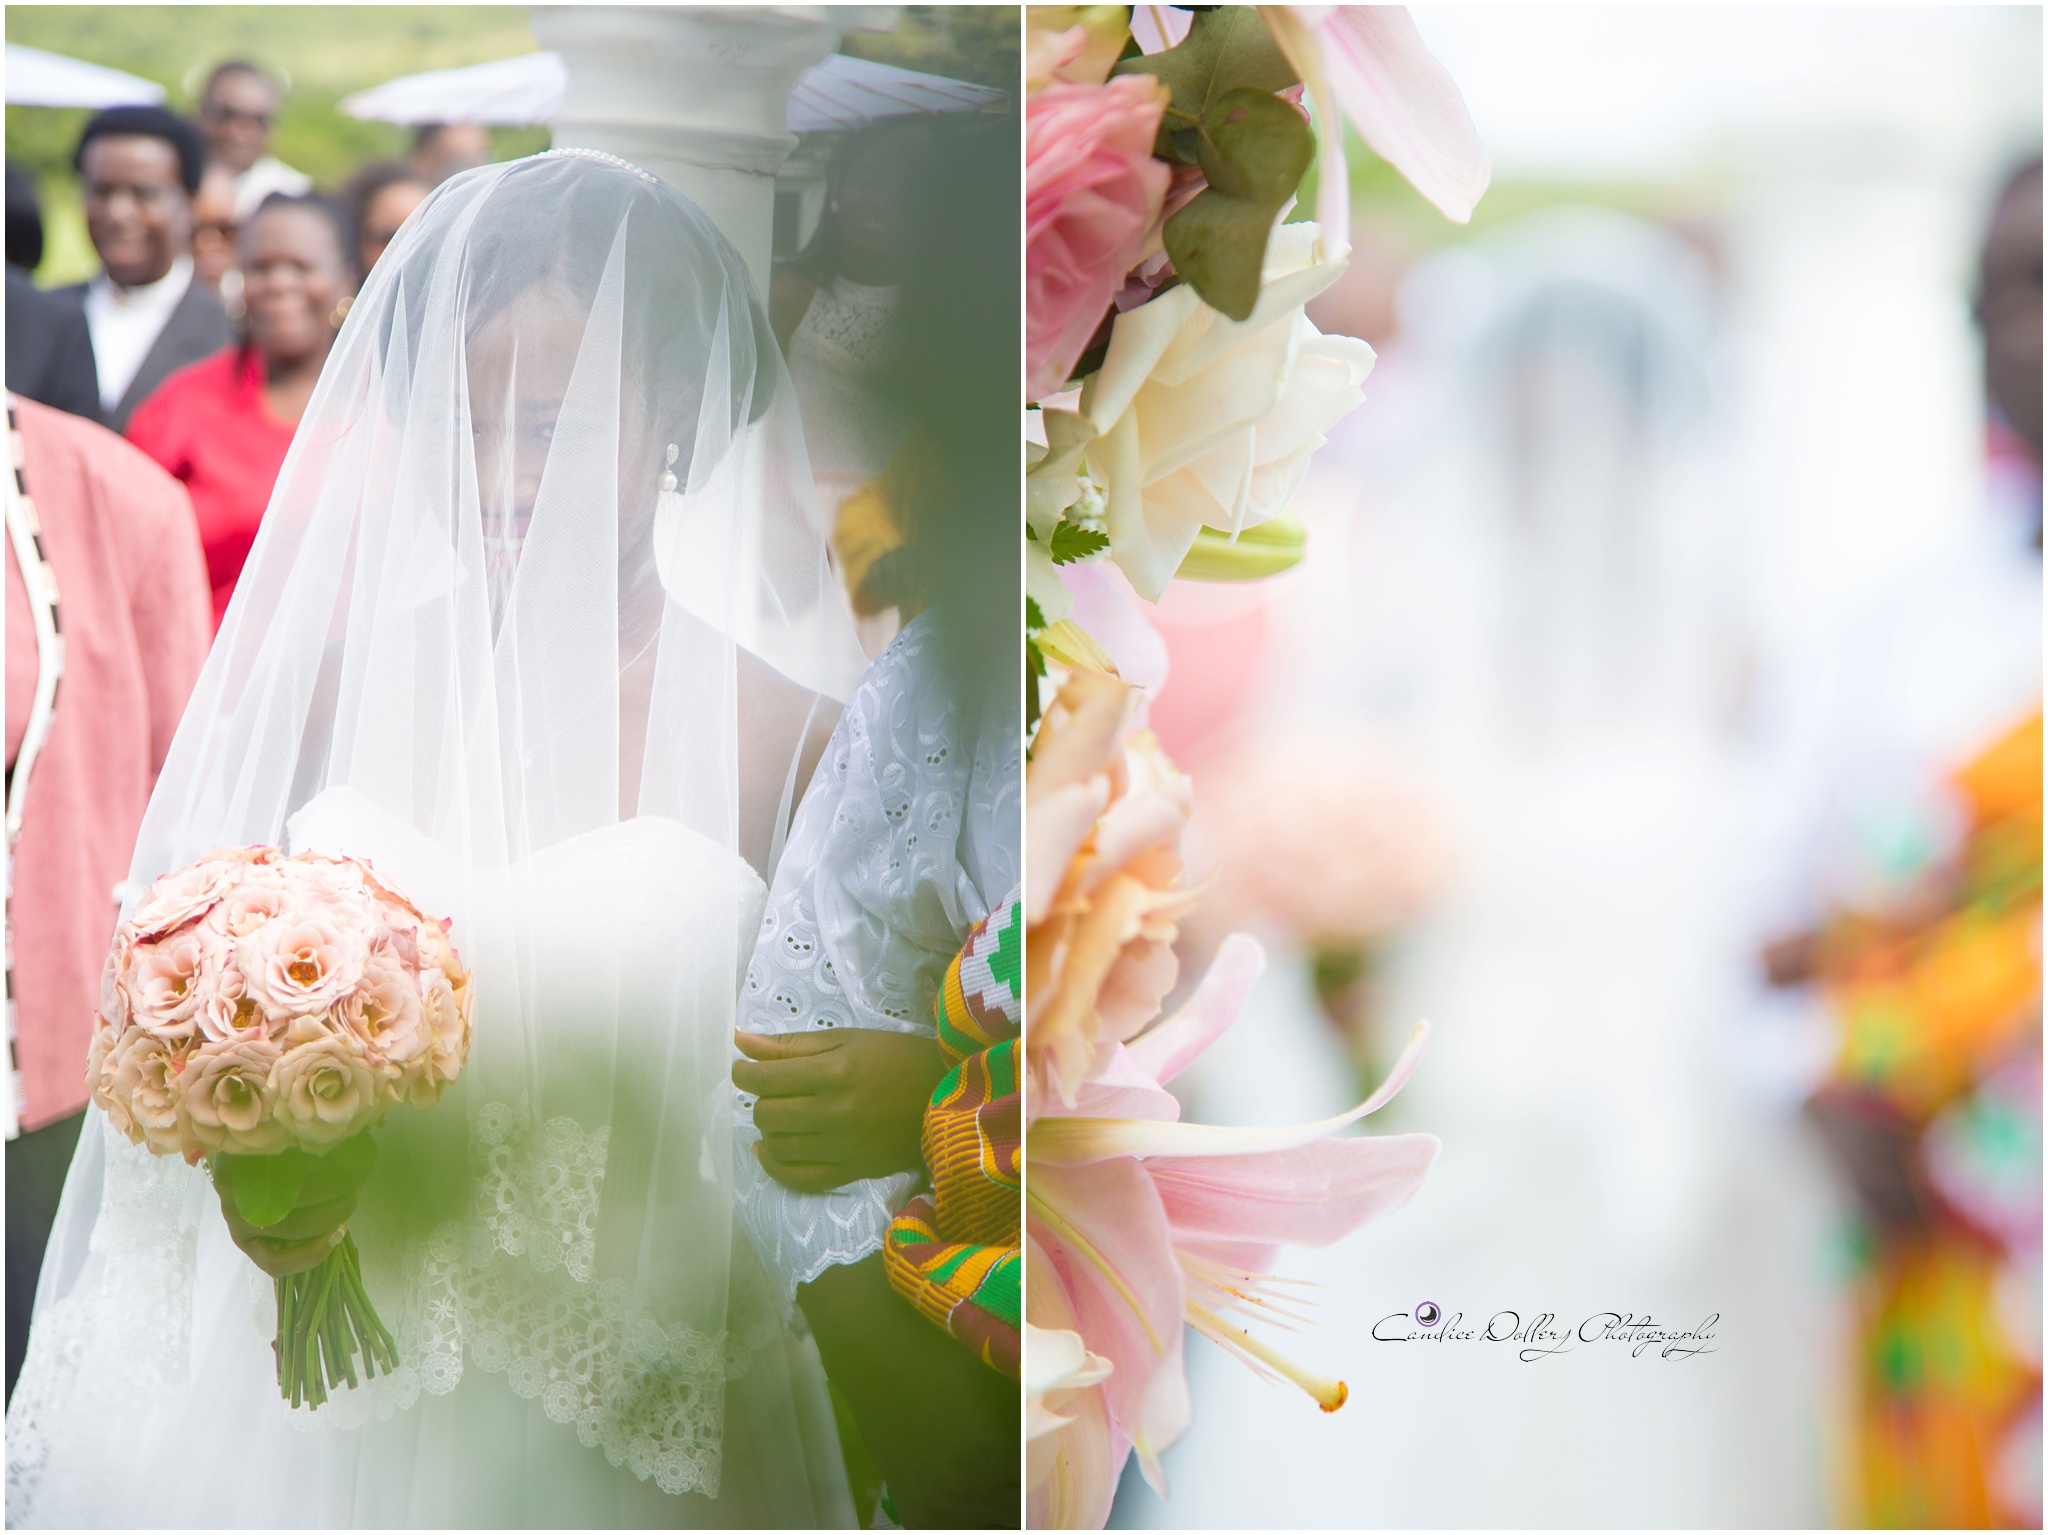 Reuben & Antoinette's Wedding - Candice Dollery Photography_7863